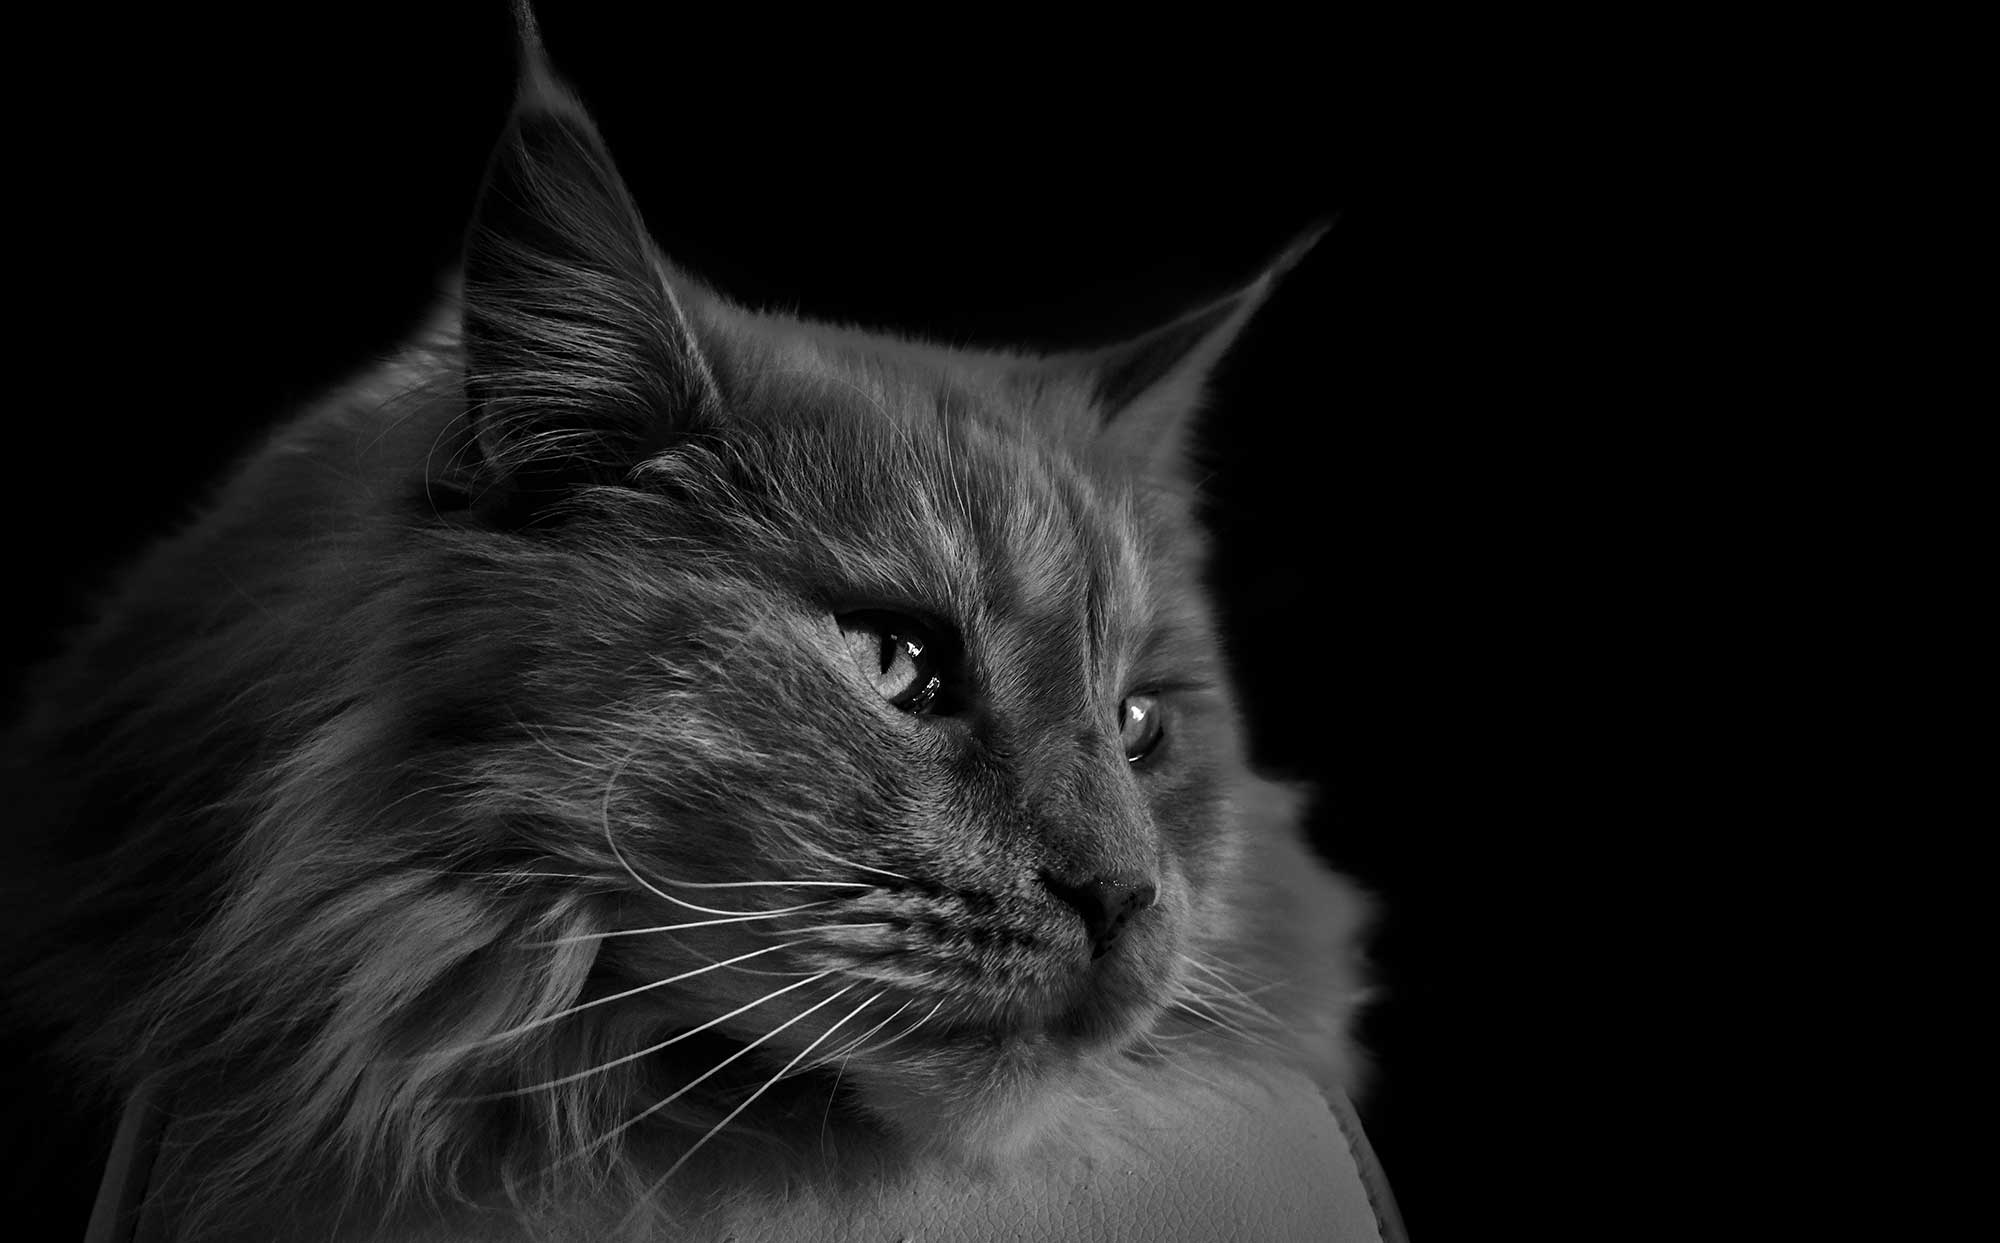 A cat on a dark background